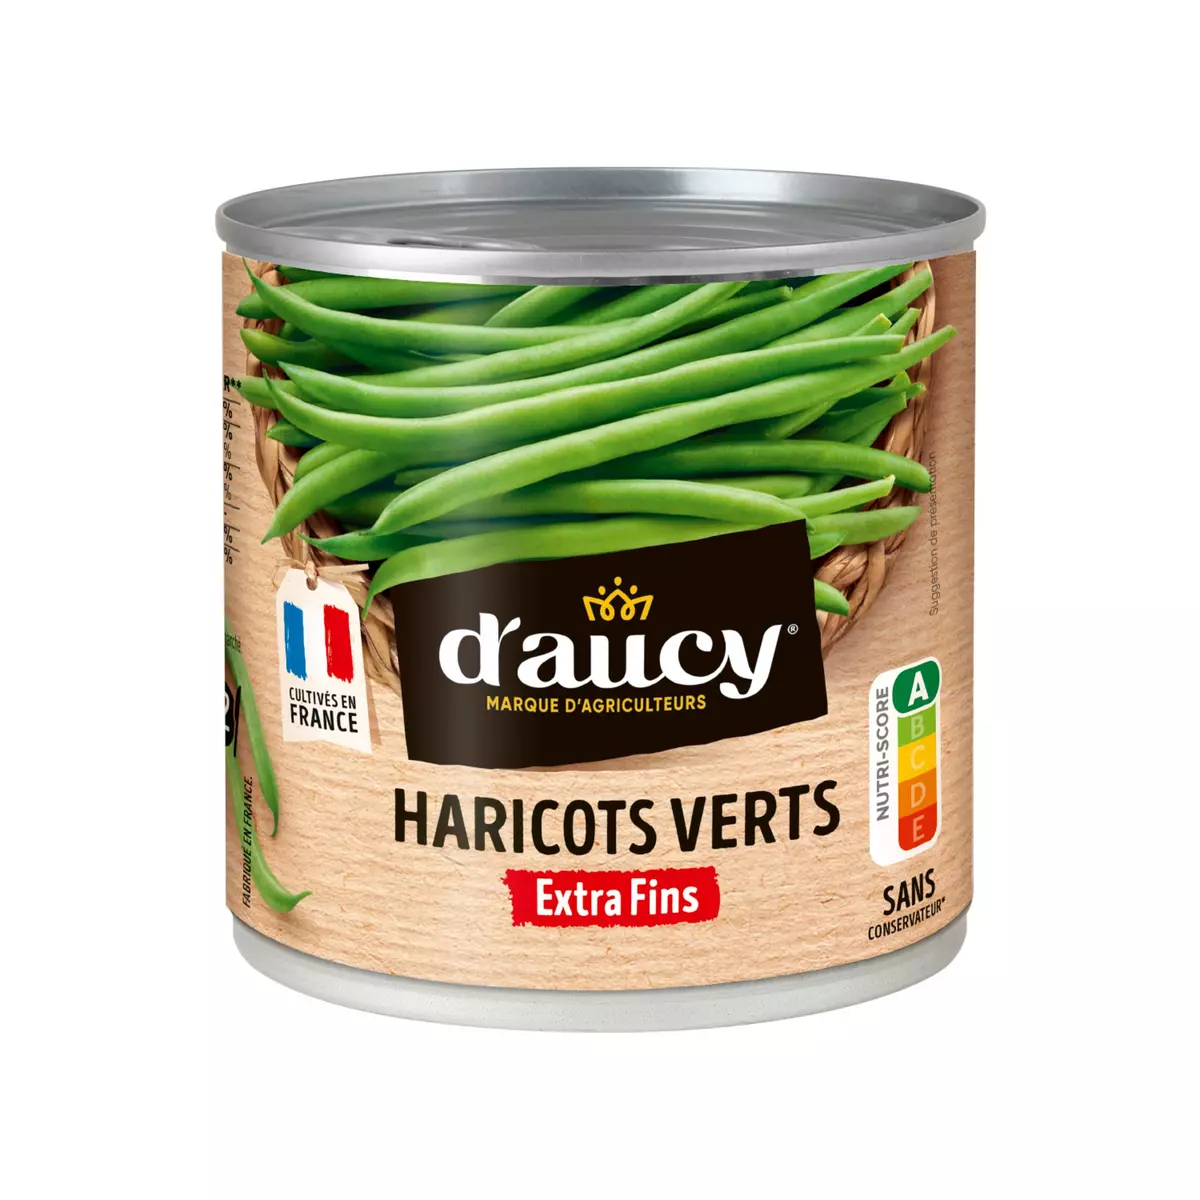 D'AUCY Haricots verts extra fins 100% cultivés France 220g